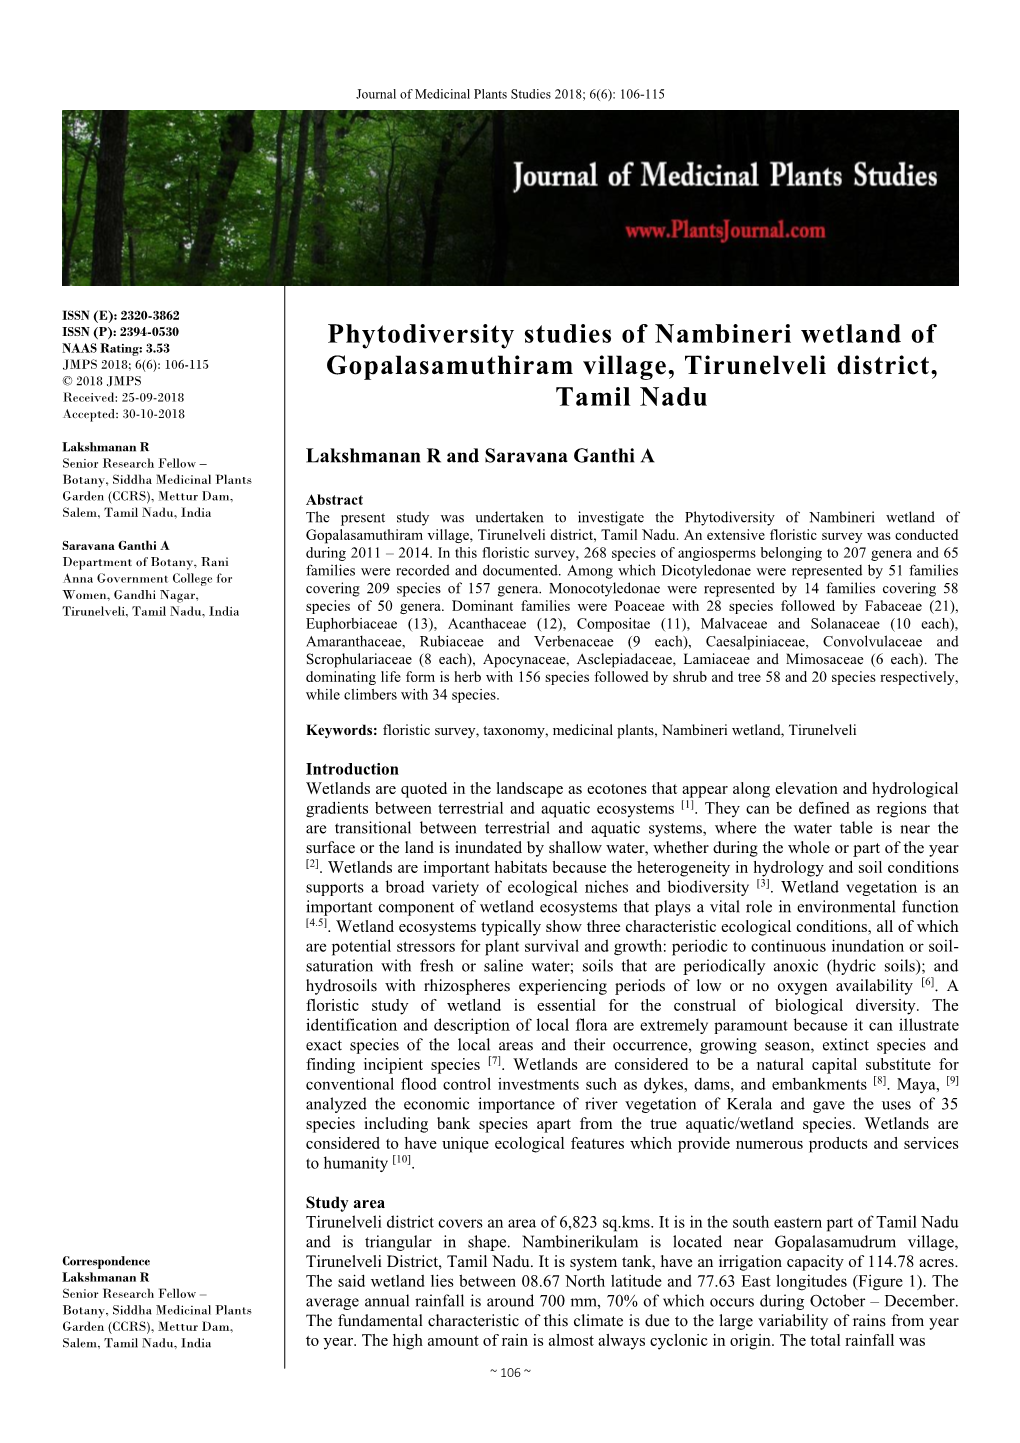 Phytodiversity Studies of Nambineri Wetland of Gopalasamuthiram